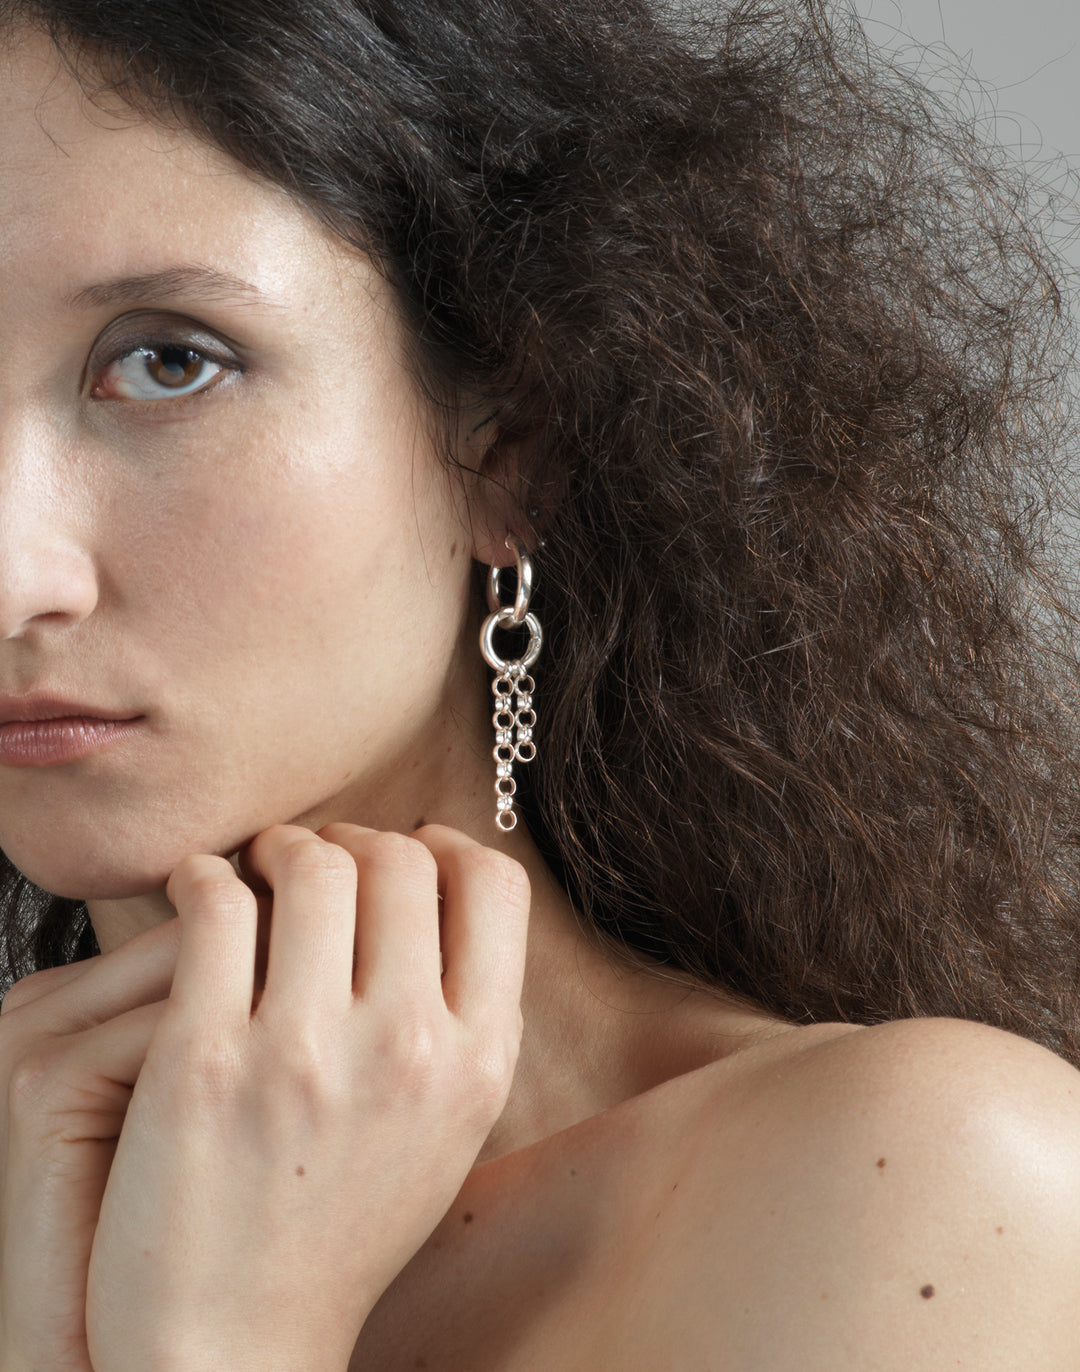 llayers jewelry women silver chain hoops earrings jewelry minimal - Made in Brooklyn New York 3